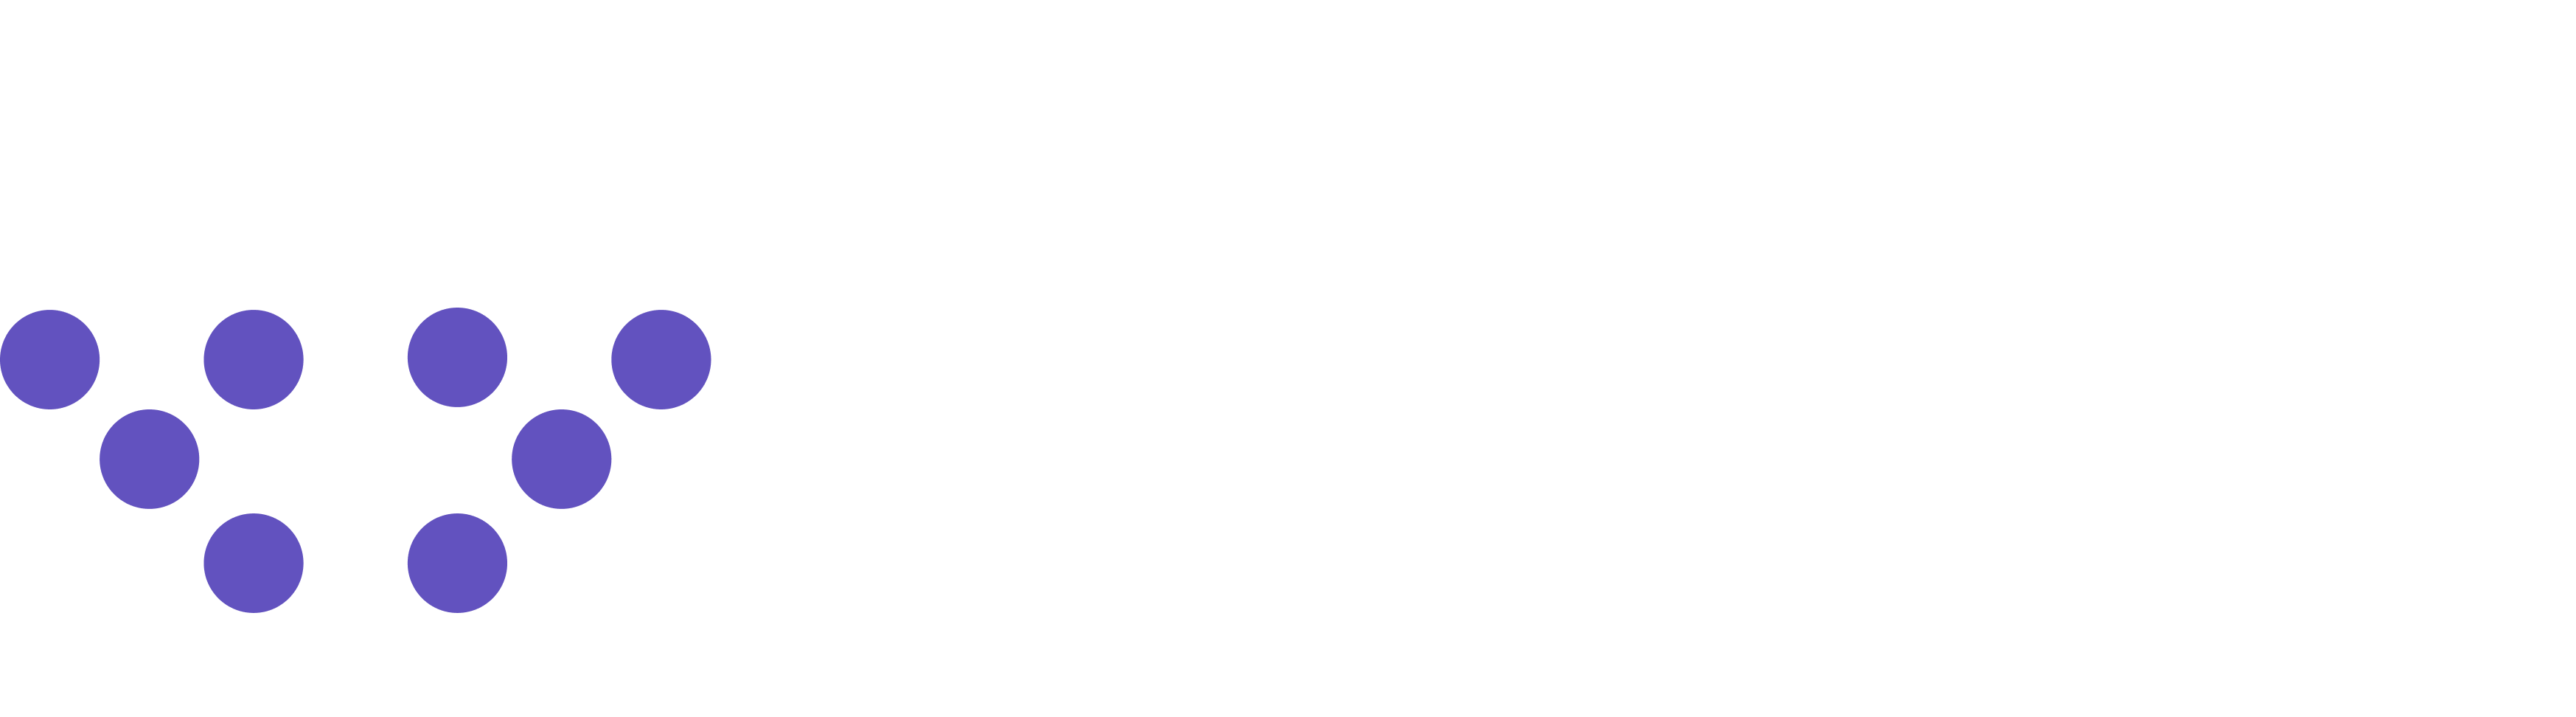 Blockchain Acceleration Foundation logo